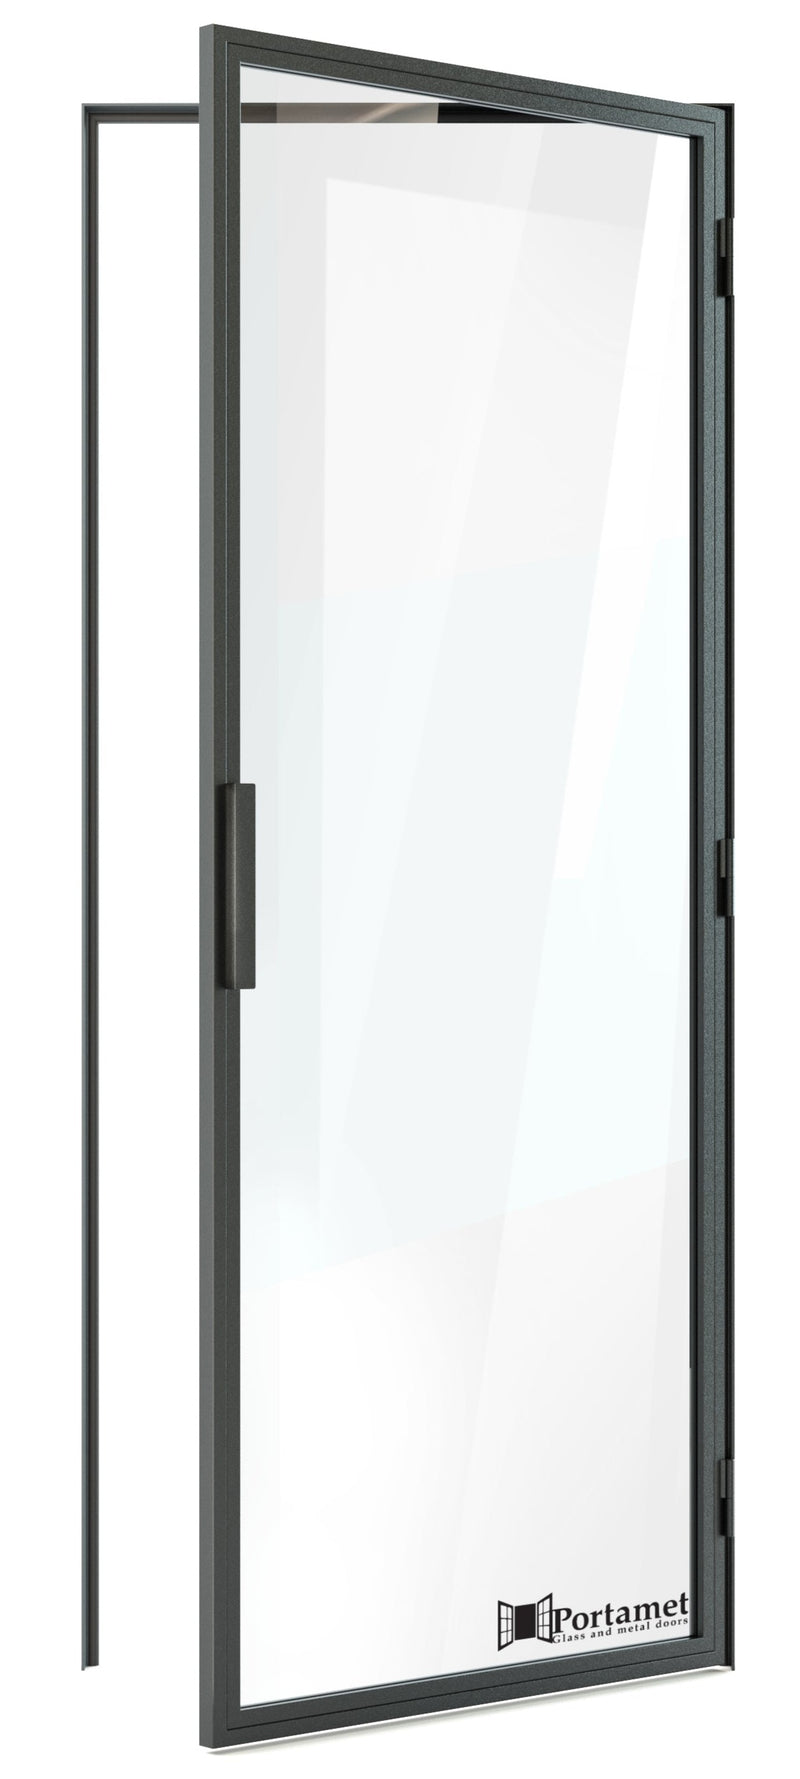 Portamet by Sfarzo - Milano Classic Single Glazed Steel Hinged Door with Frame